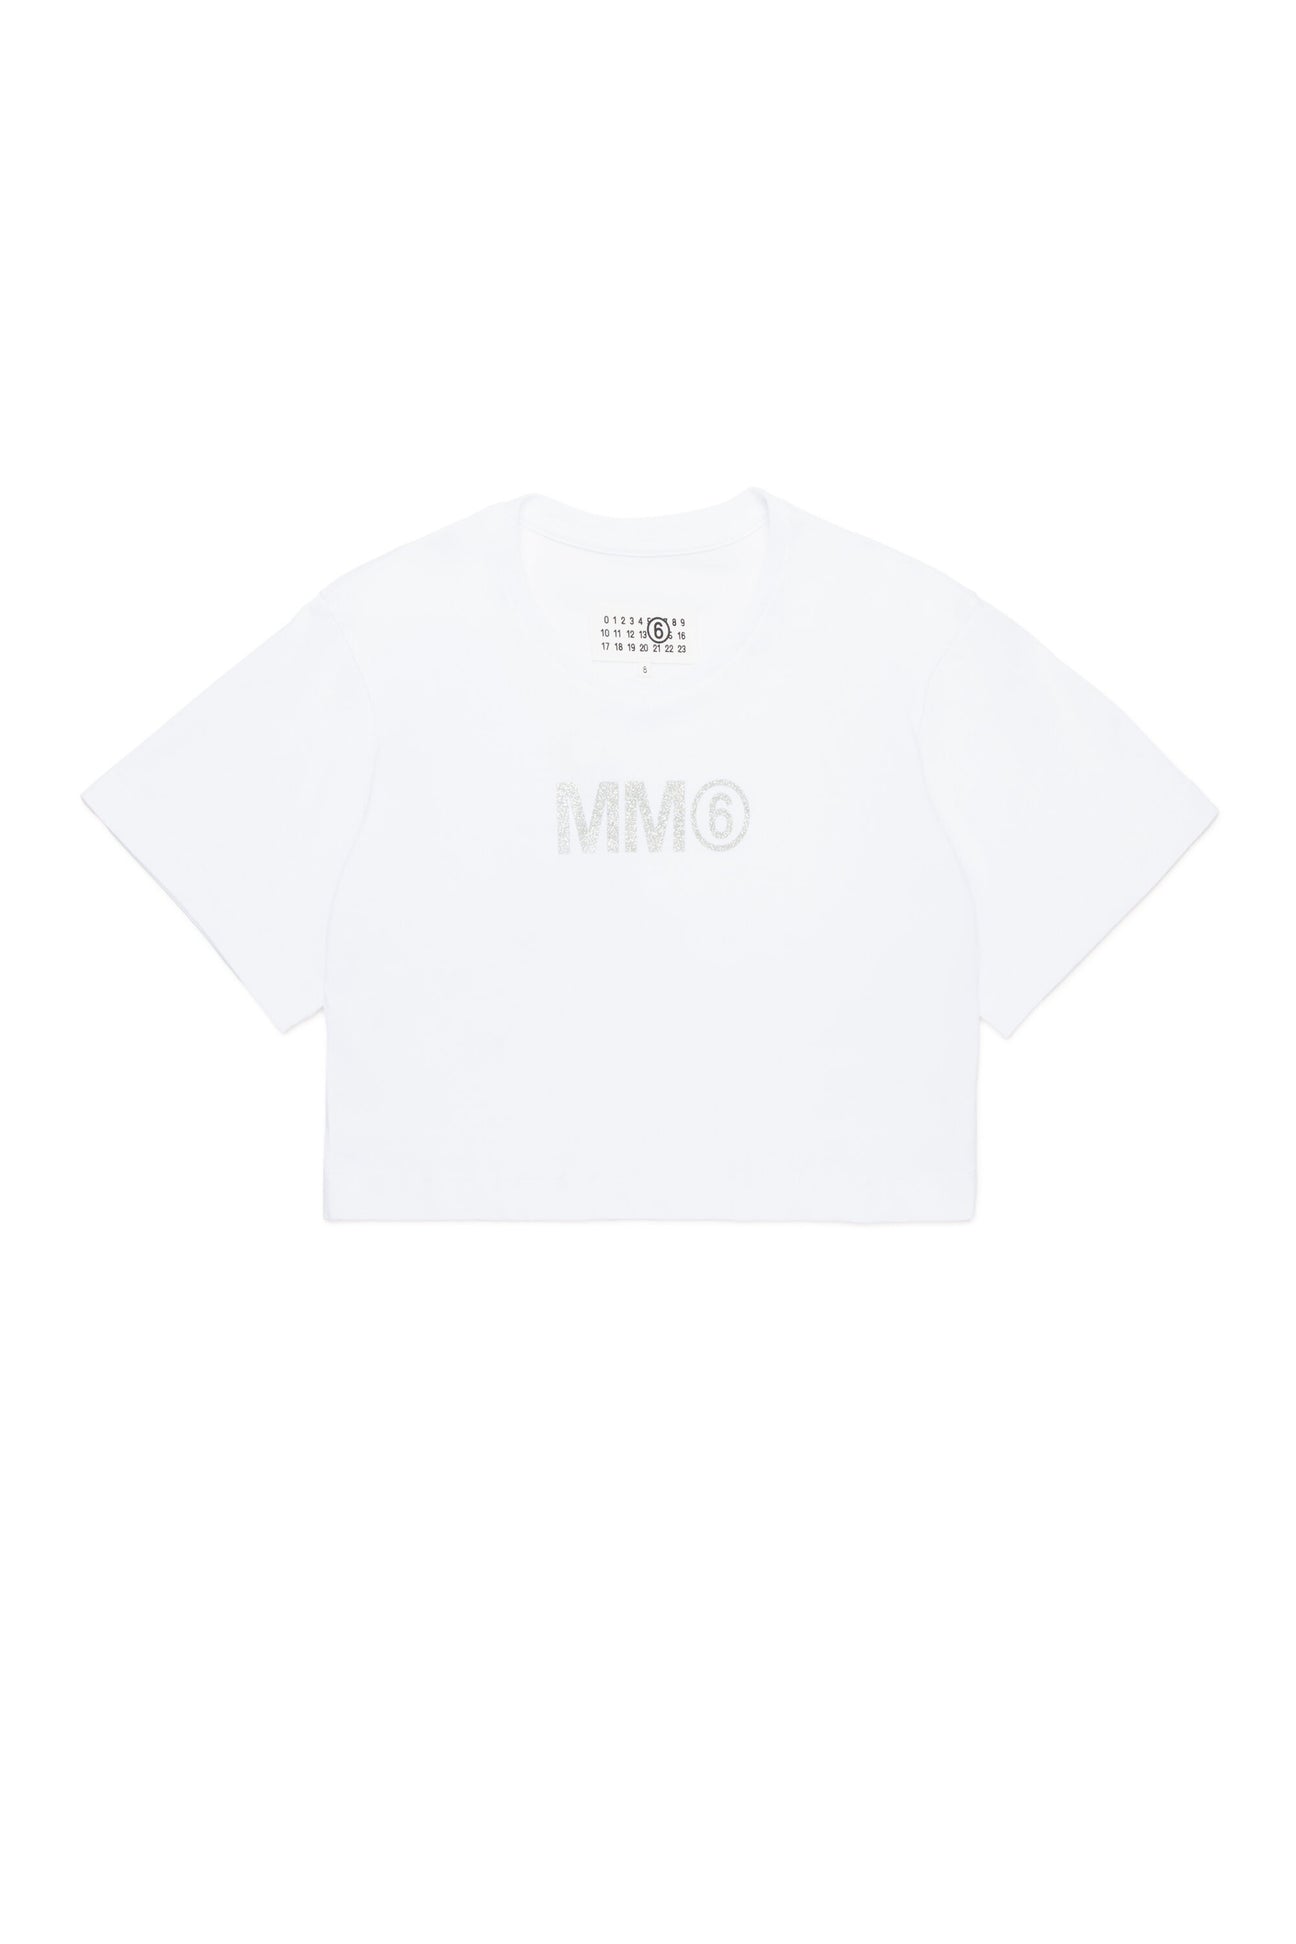 MM6グリッターロゴのブランドロゴ入りクロップドTシャツ 